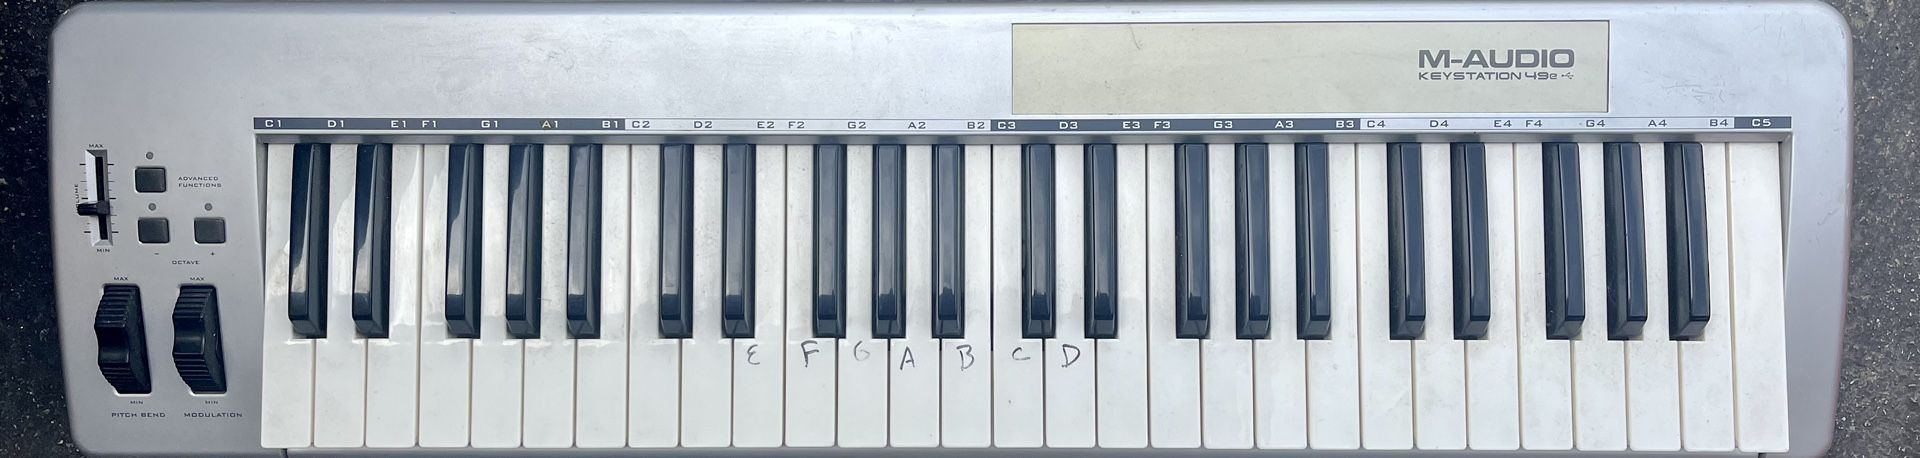 M-Audio 49 Key Controller 